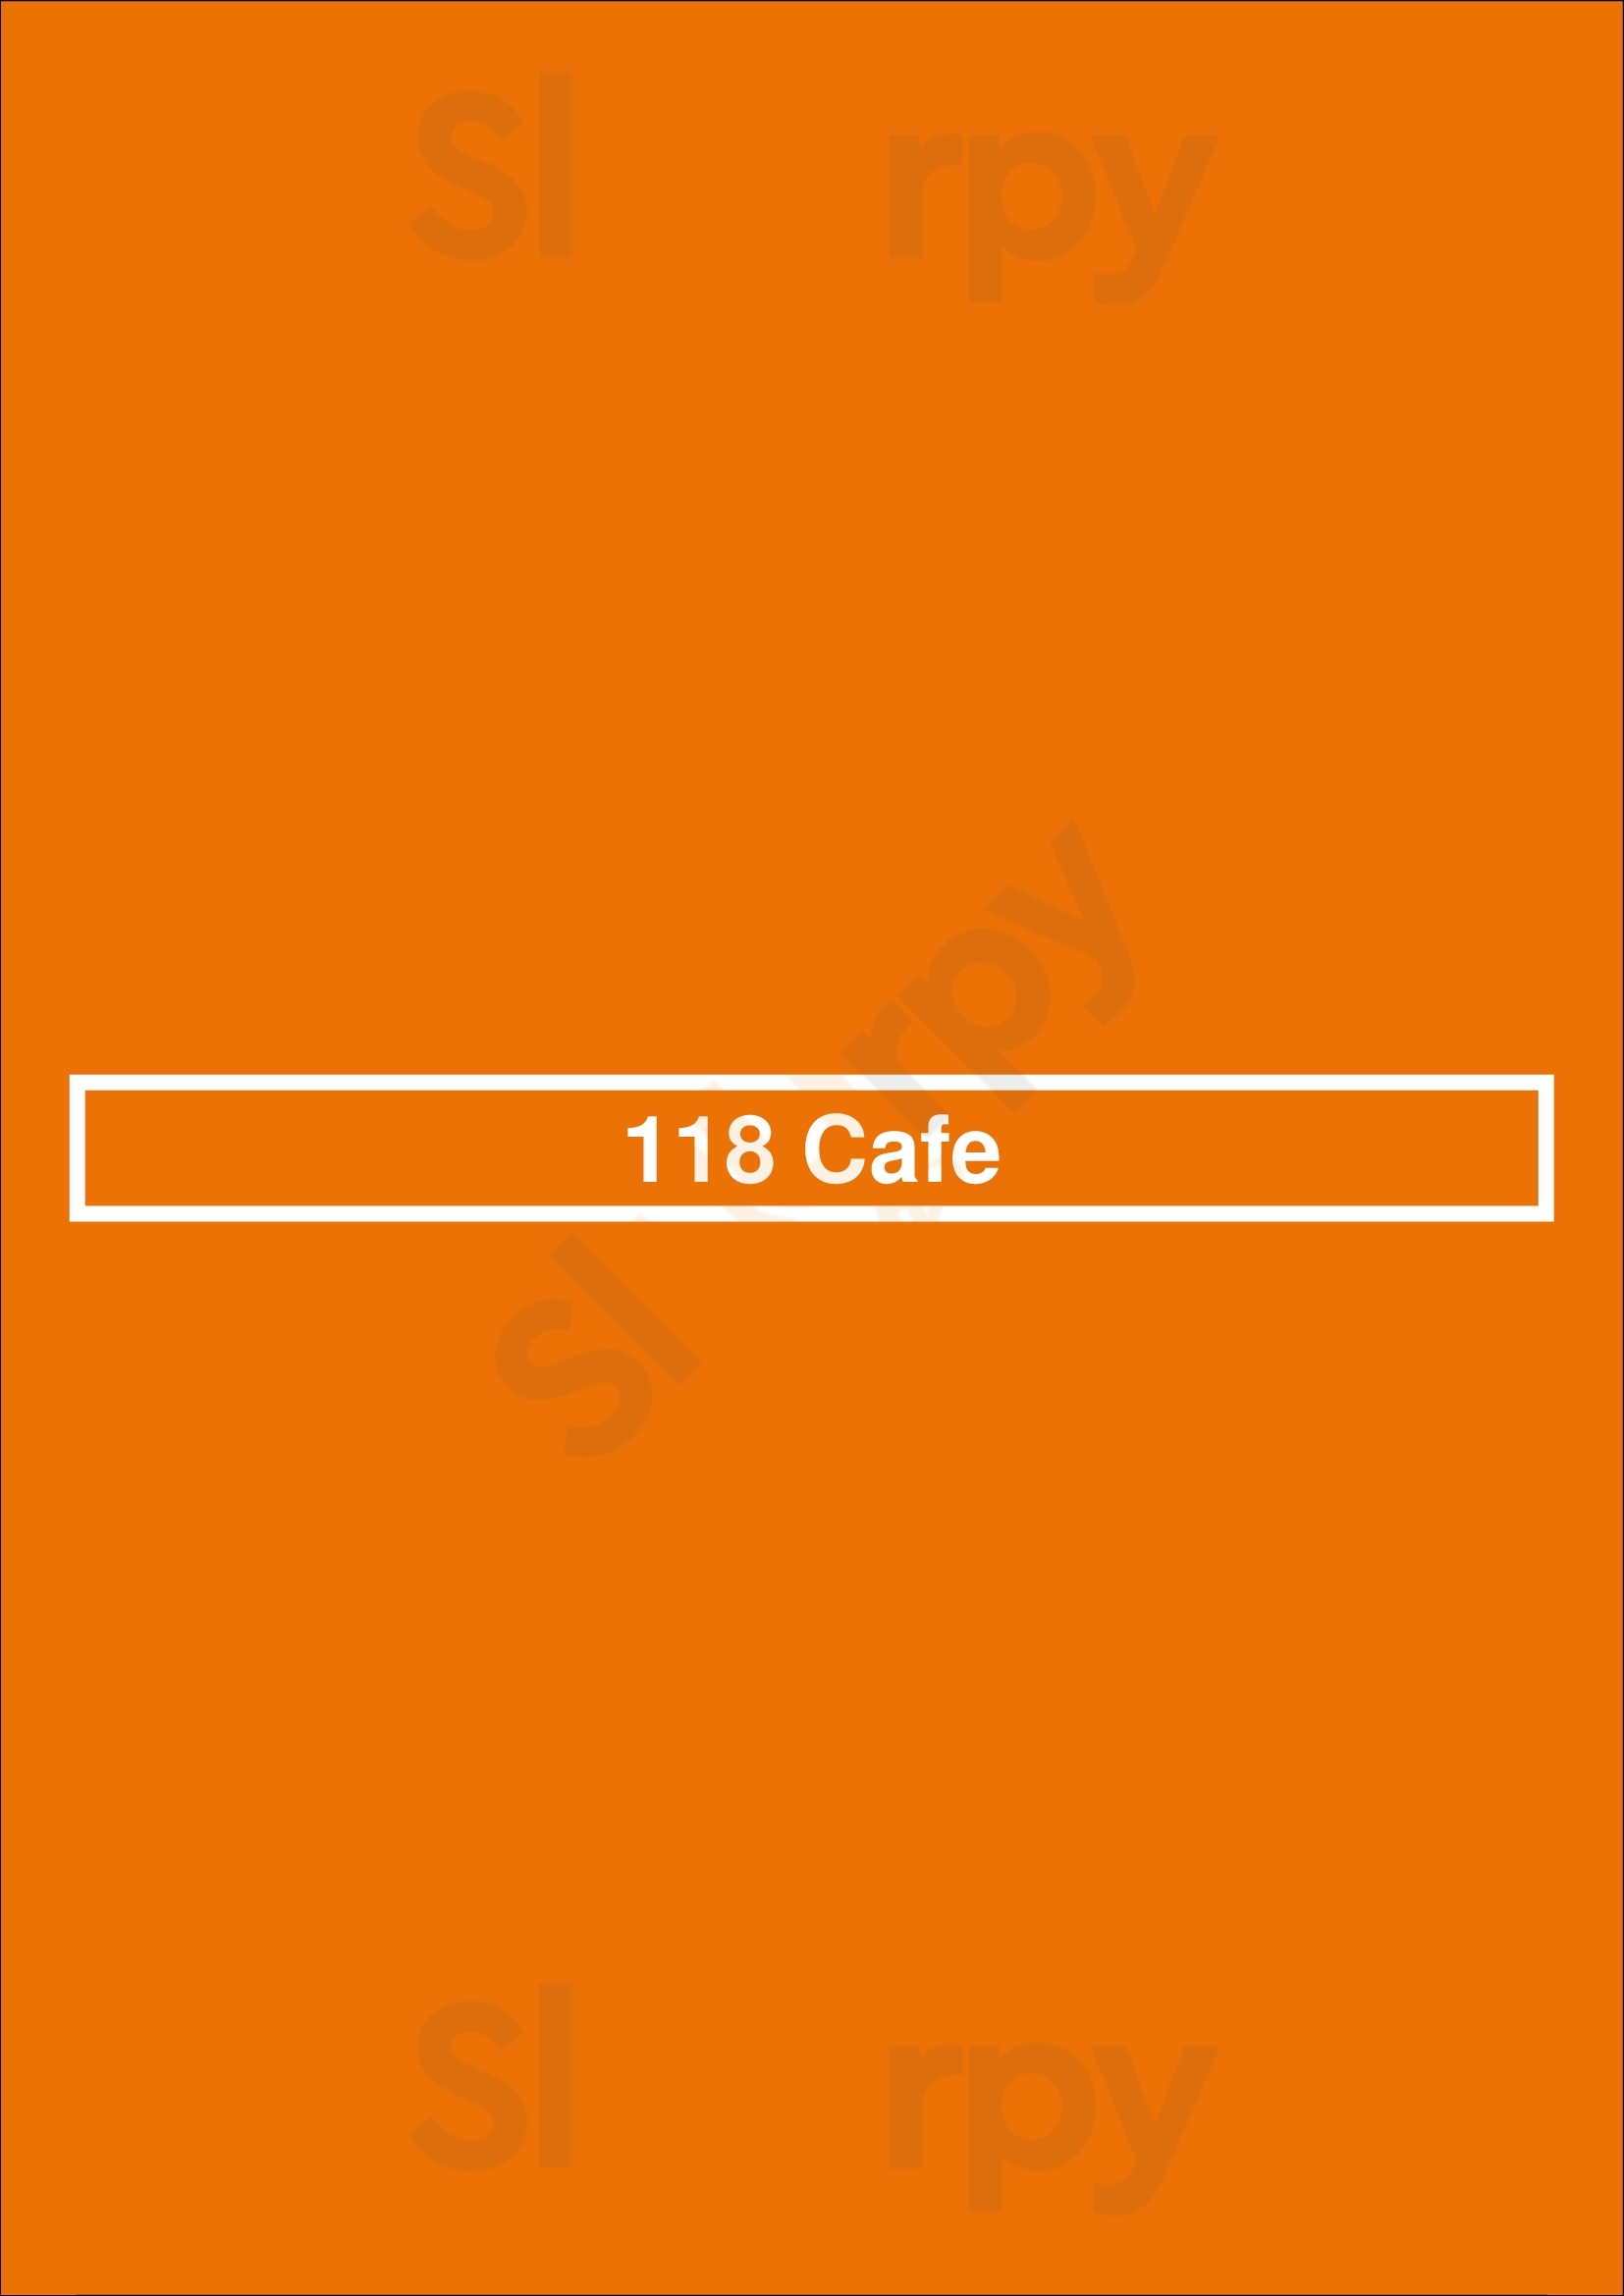 118 Cafe Simi Valley Menu - 1